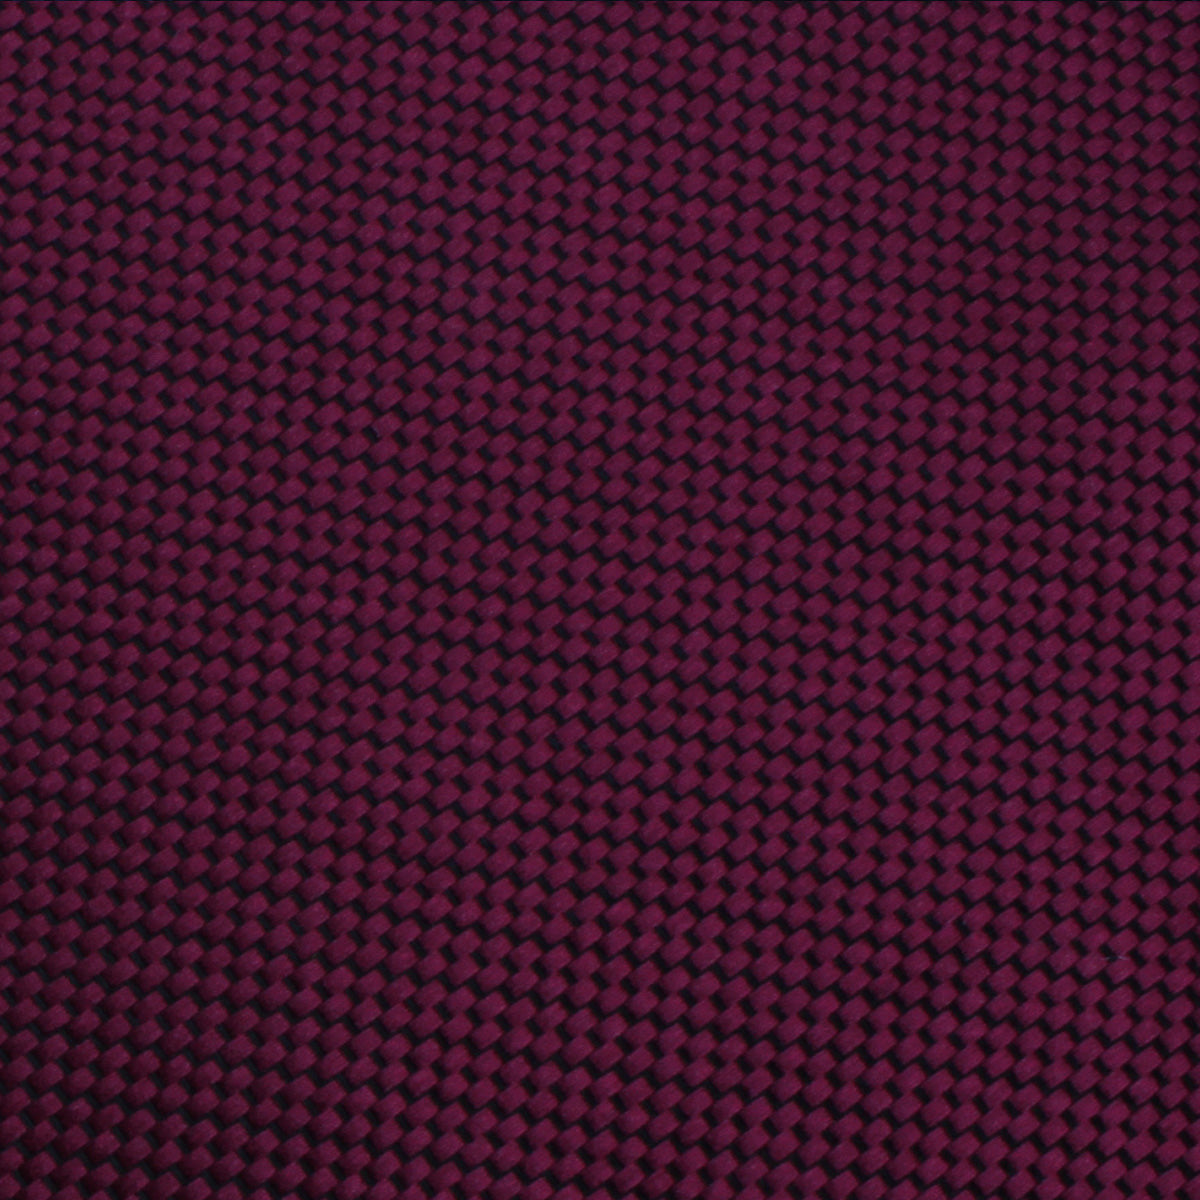 Metallic Maroon Oxford Weave Pocket Square Fabric